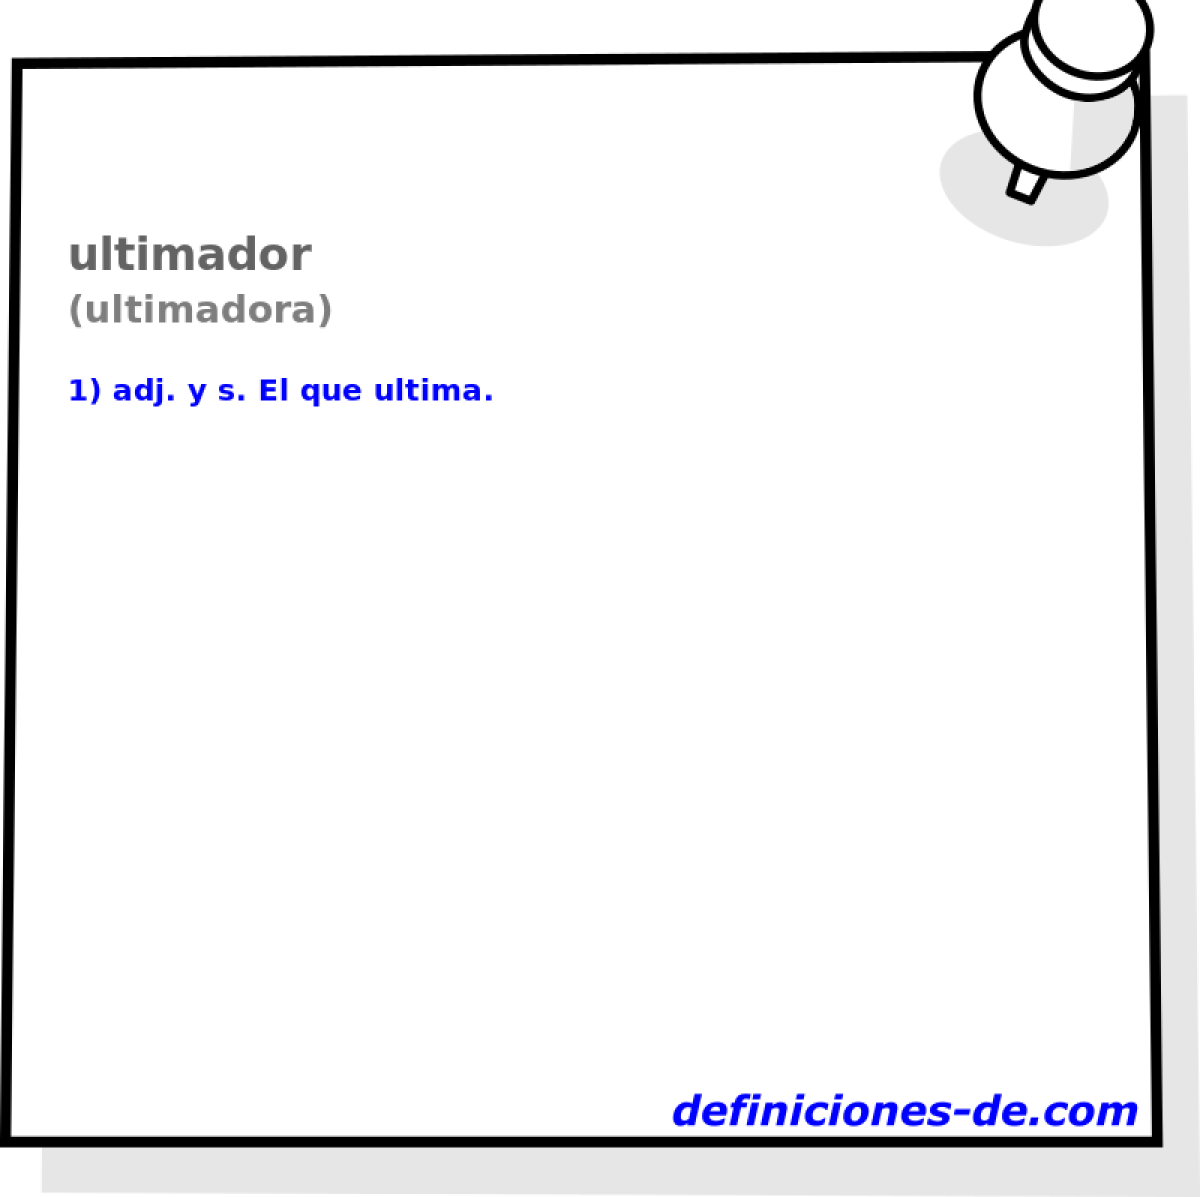 ultimador (ultimadora)